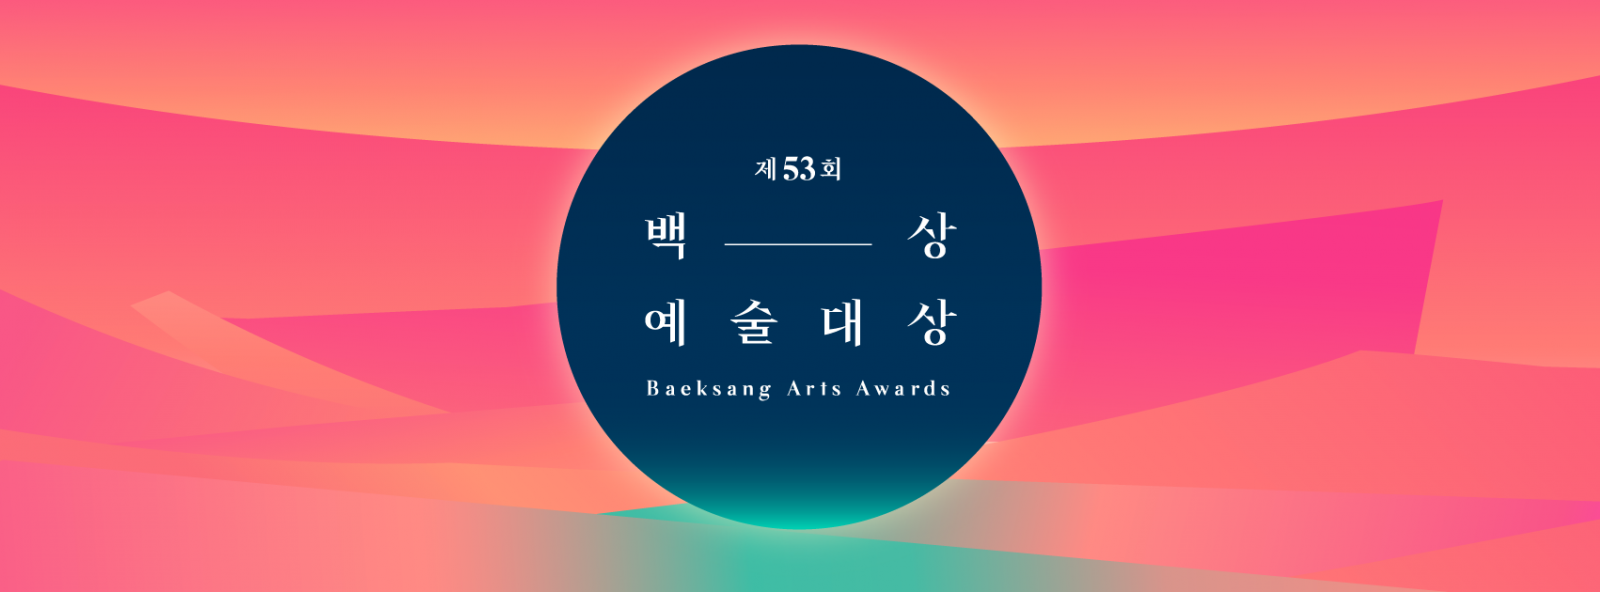 53rd Baeksang Arts Awards Winner